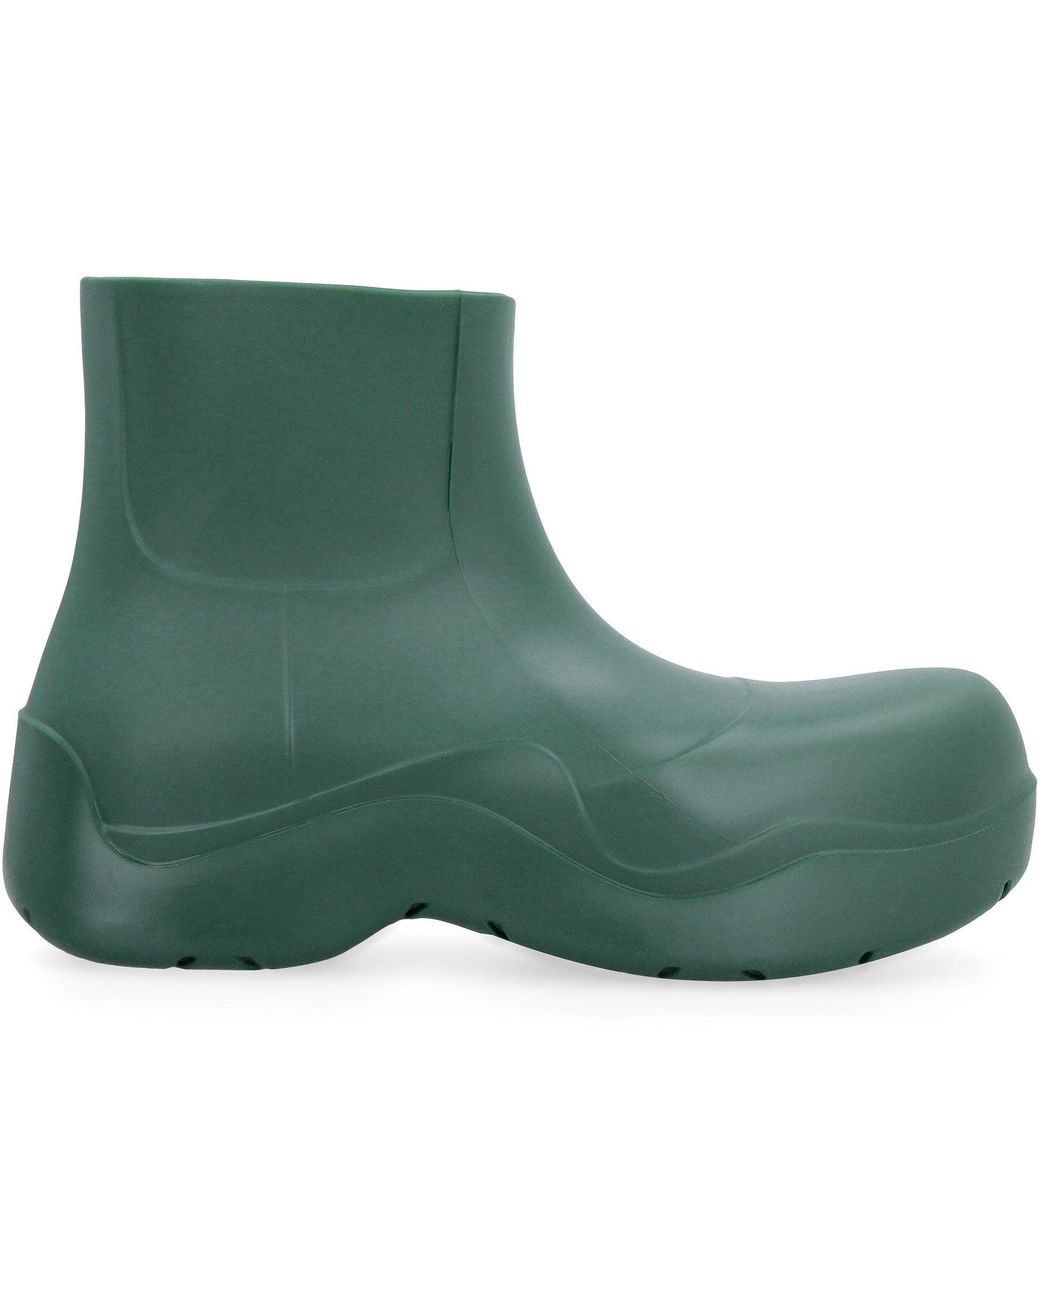 Bottega Veneta Rubber Boots Green for Men Mens Shoes Boots Wellington and rain boots Save 31% 